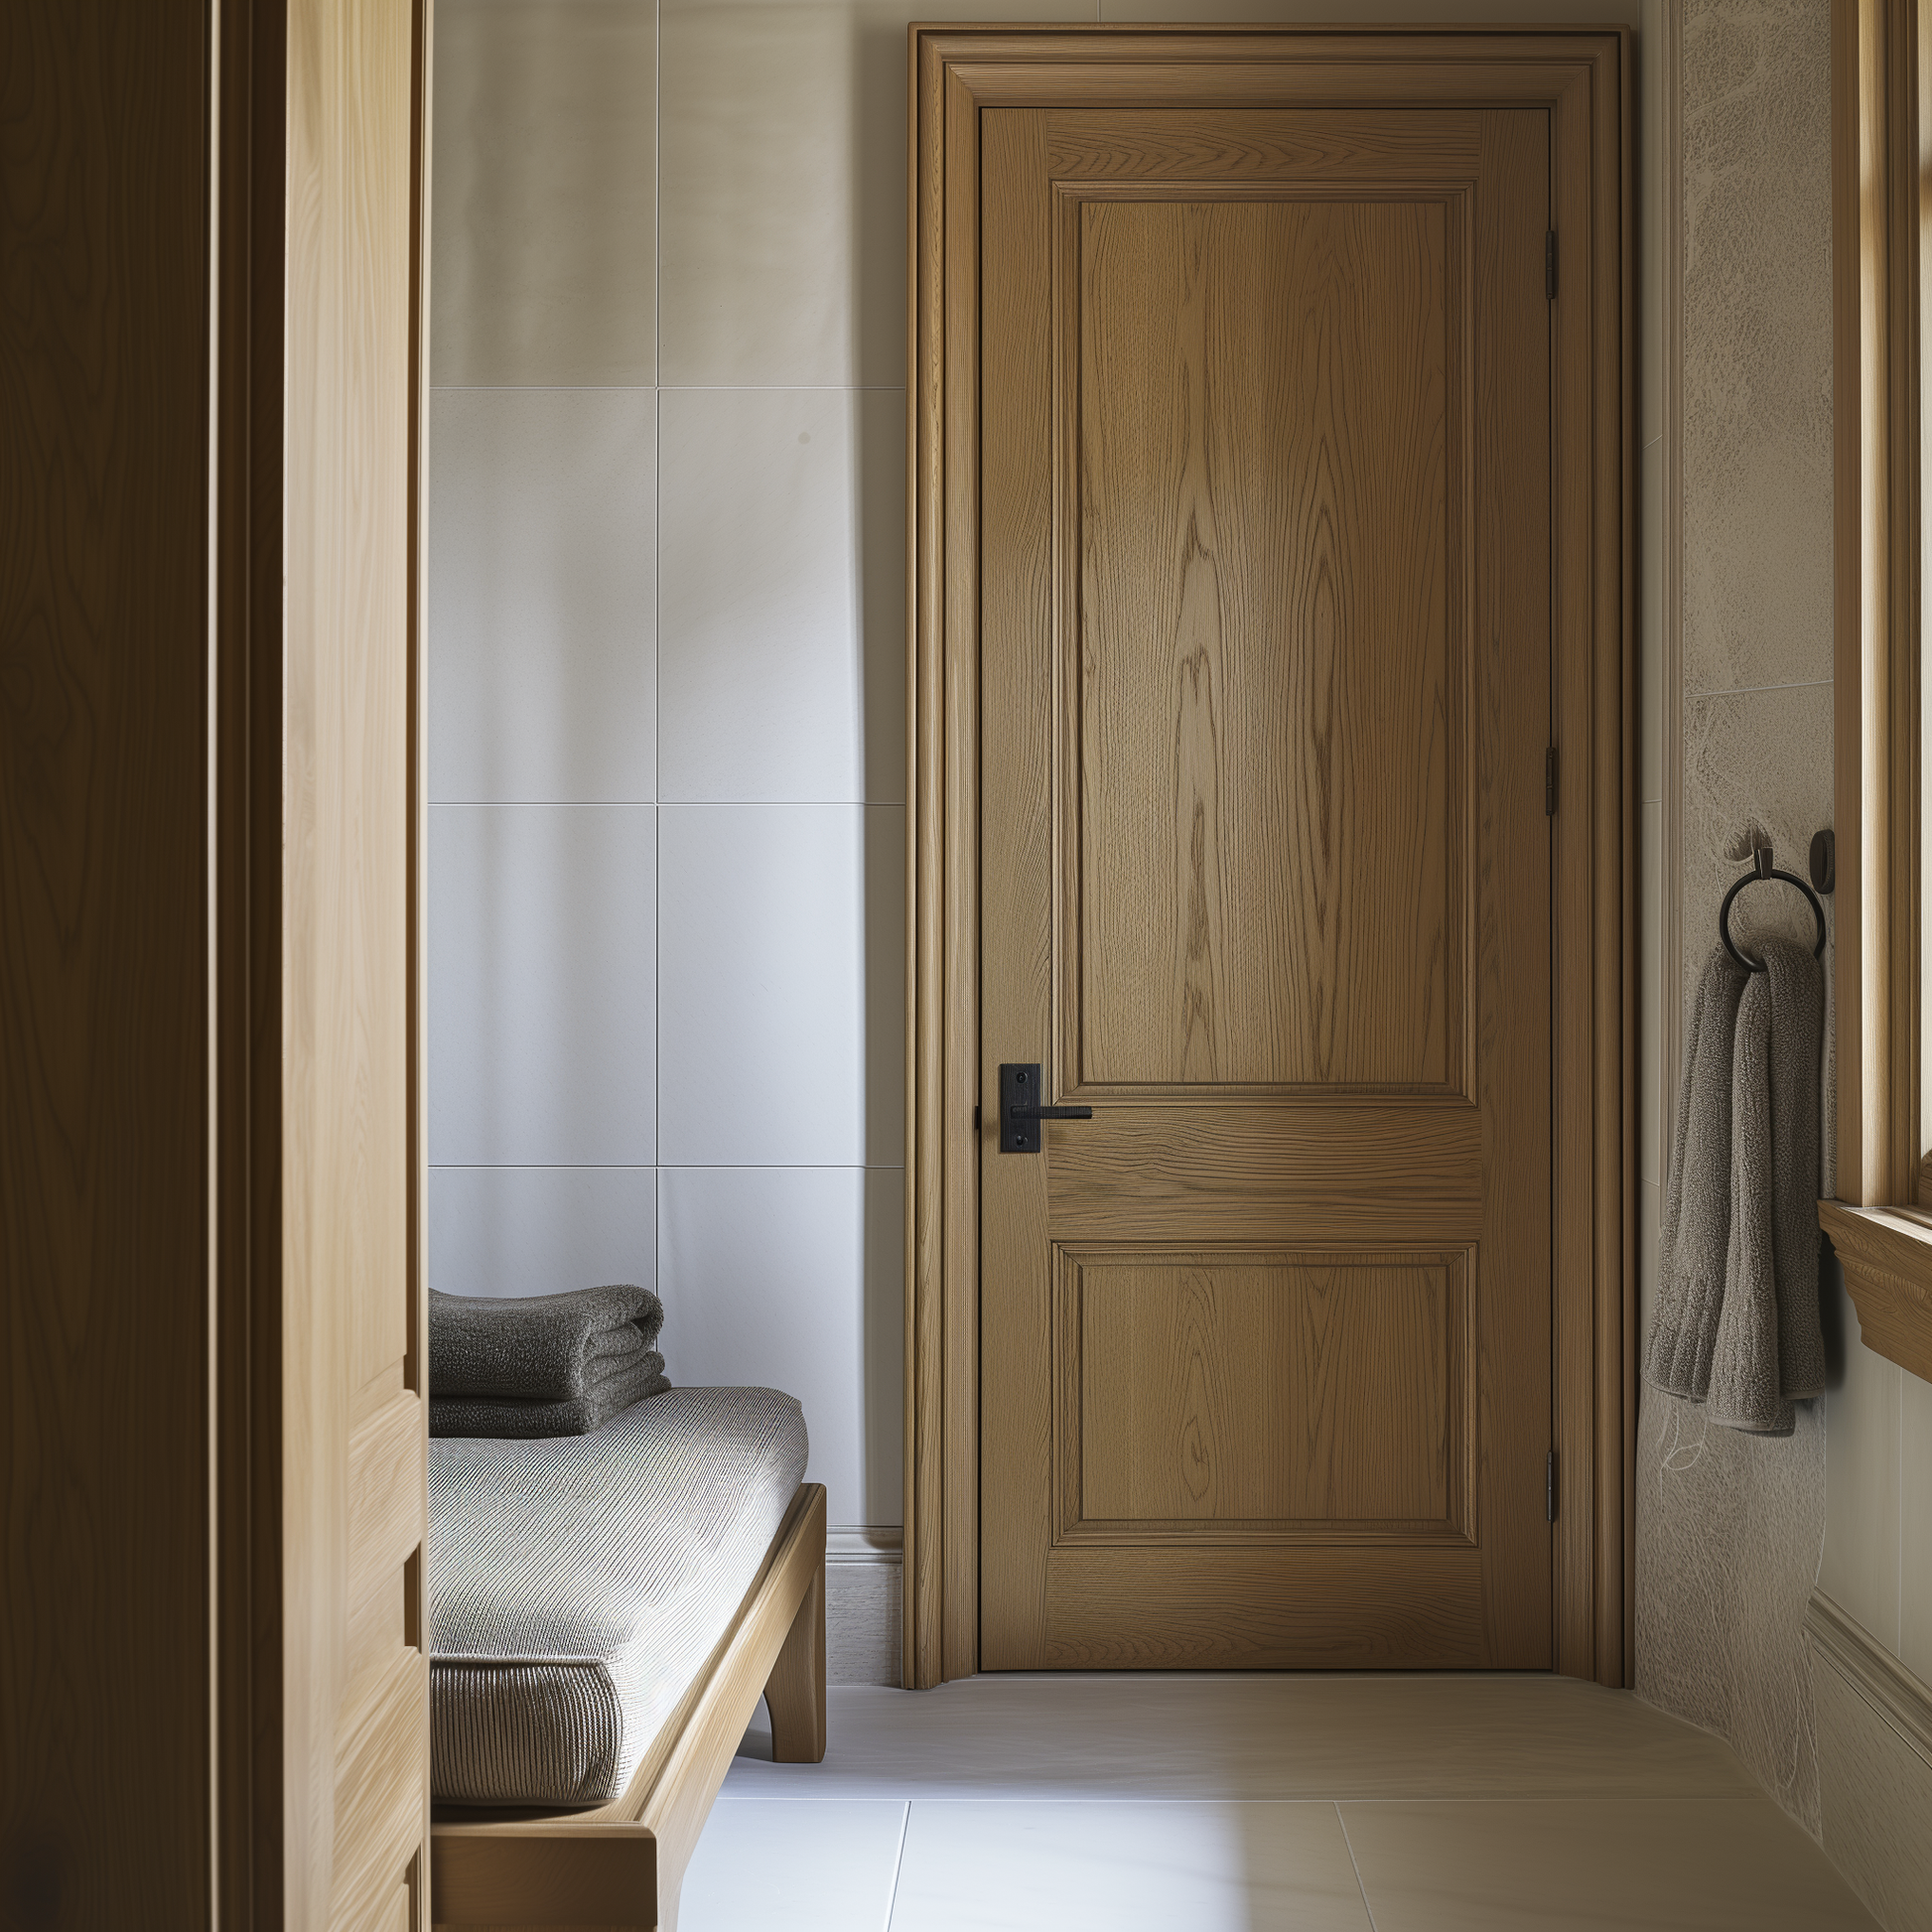 fern classic solid wood oak bespoke customizable fully custom made to order interior door in a beautiful bathroom entryway